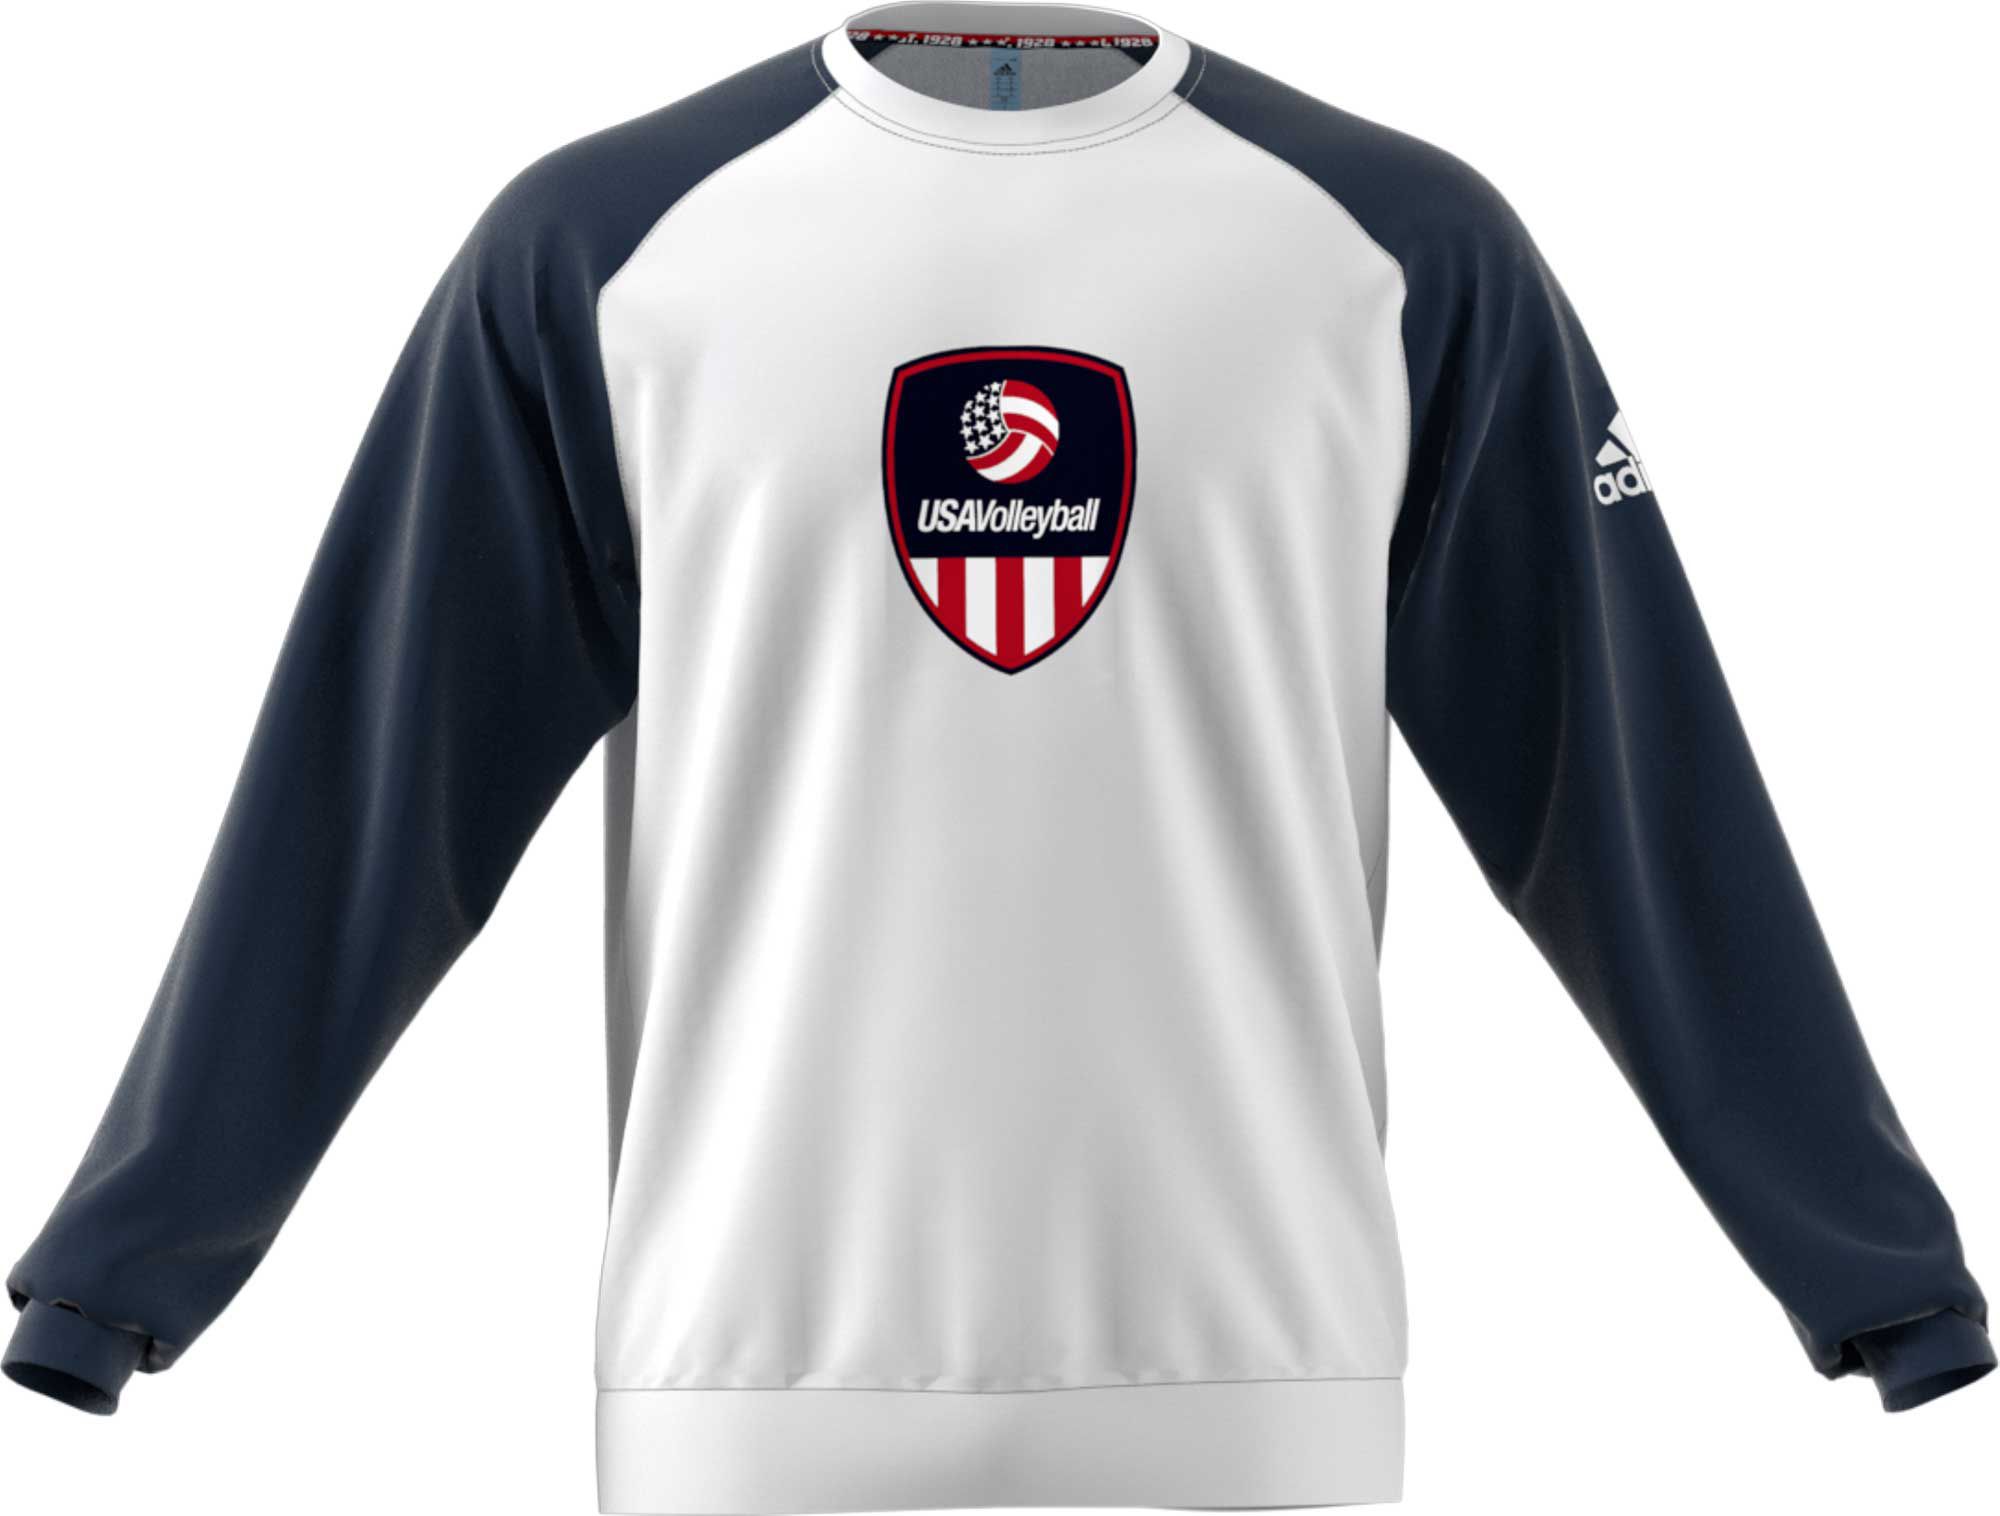 Edelsteen Ploeg Westers Adidas / Men's USA Volleyball Henley Sweatshirt